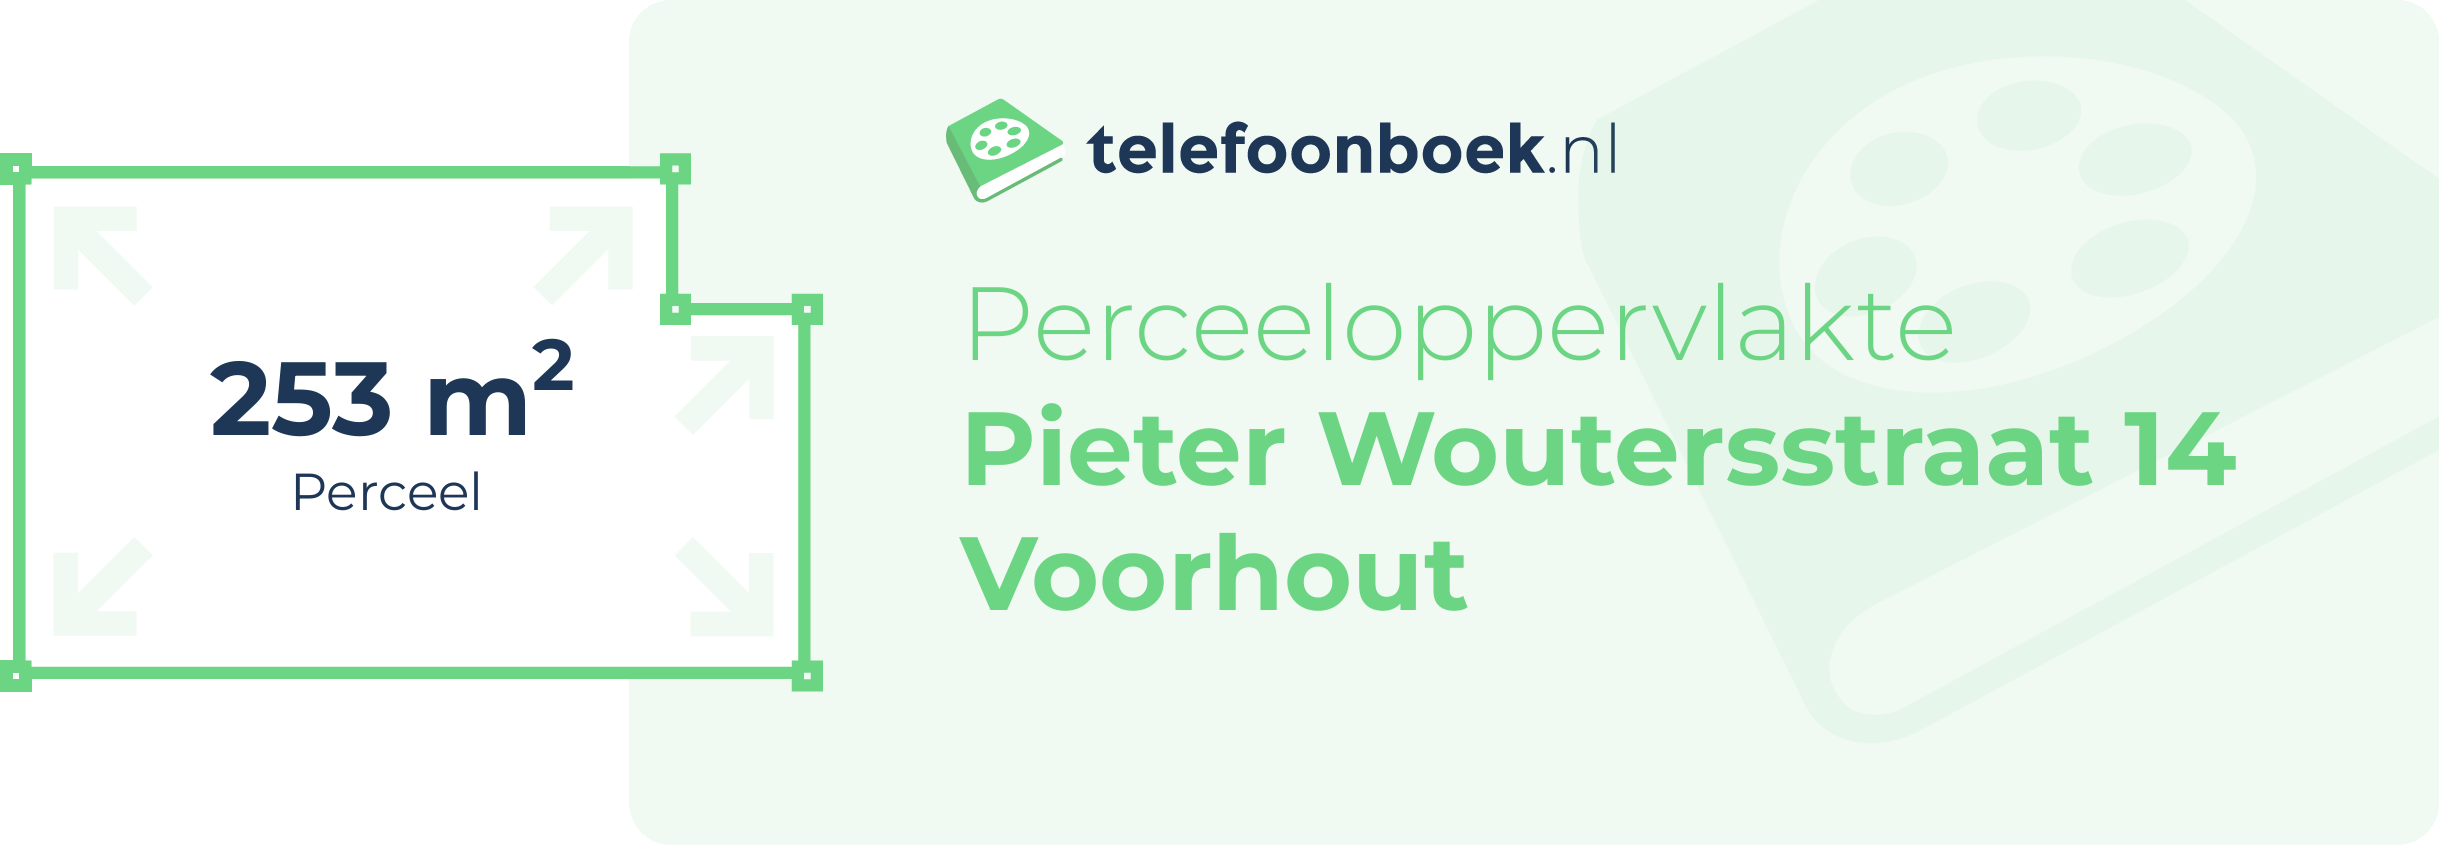 Perceeloppervlakte Pieter Woutersstraat 14 Voorhout